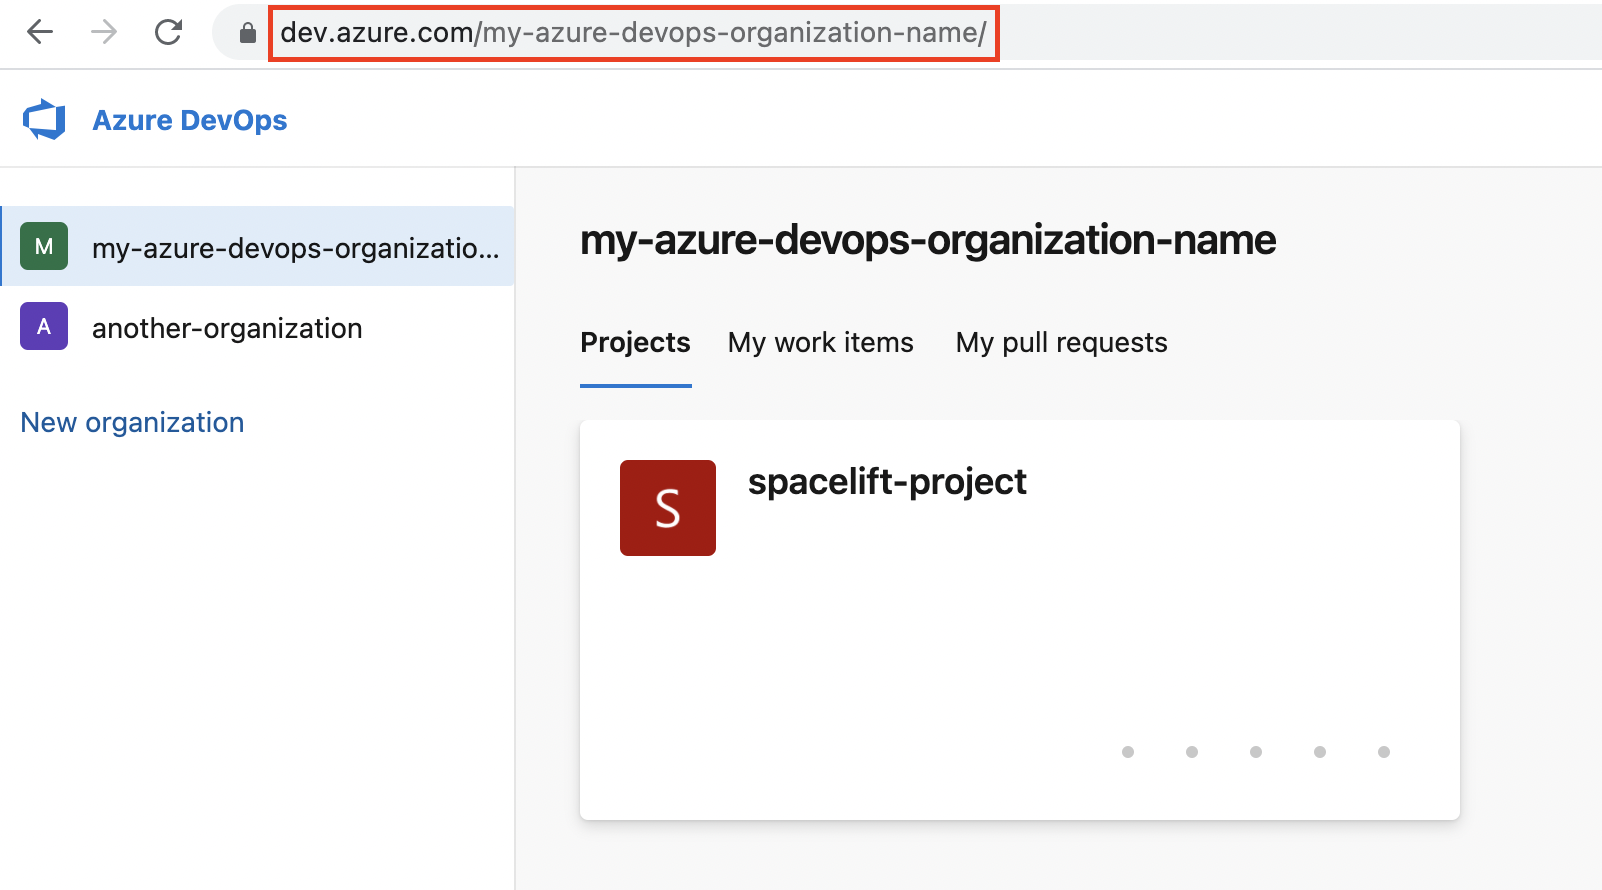 Azure DevOps main organization page